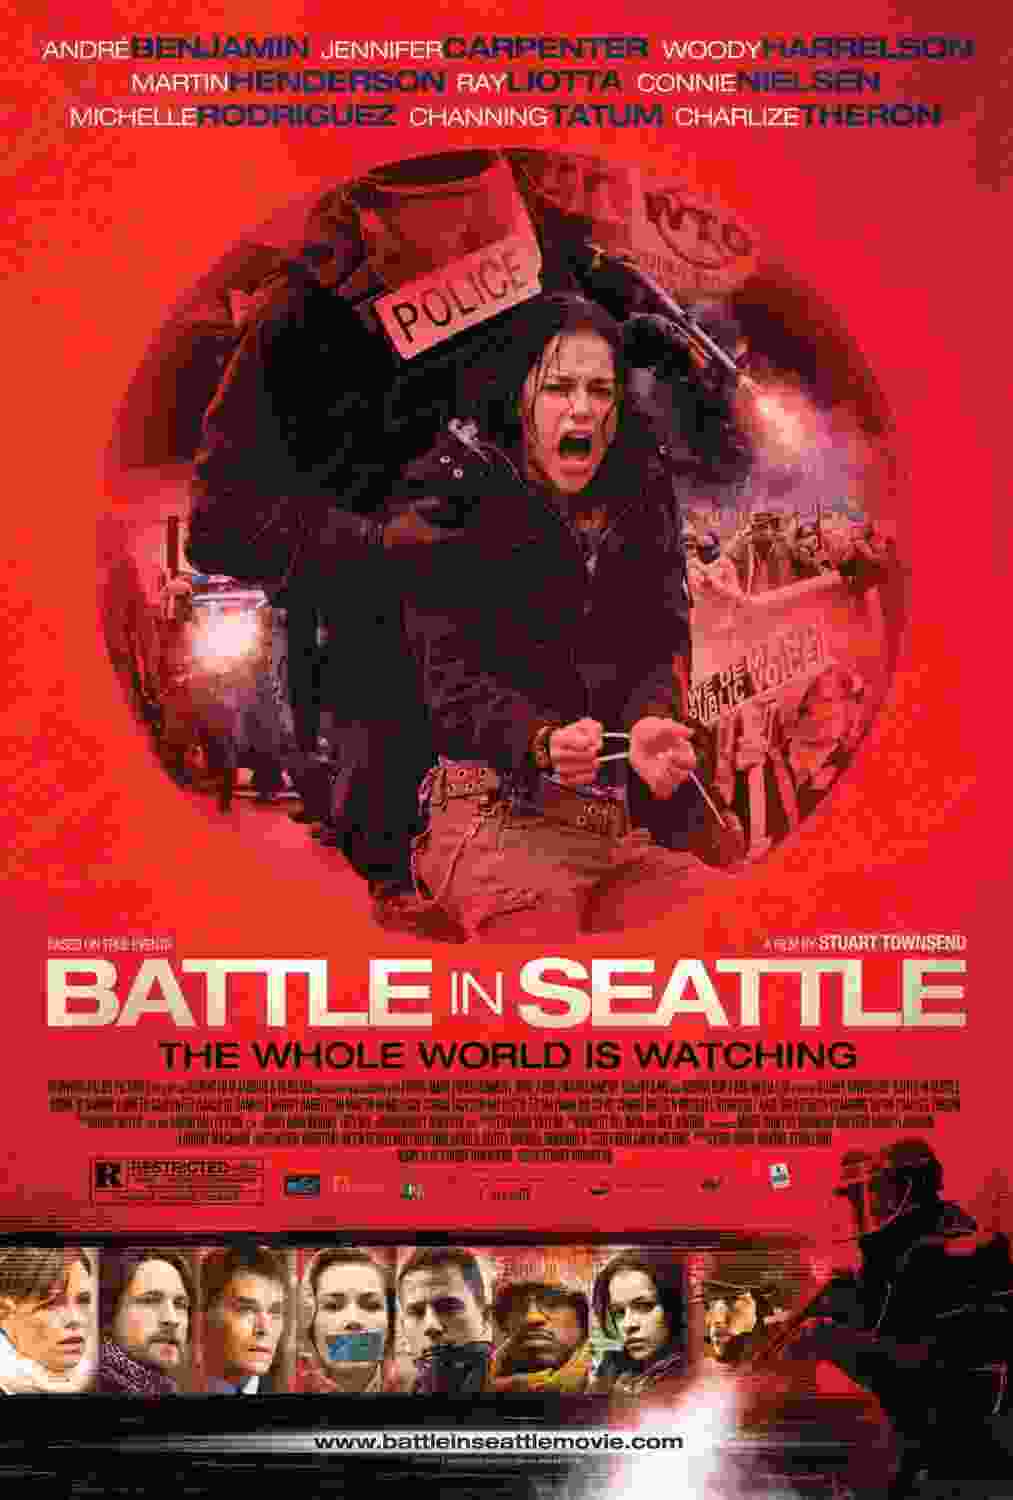 Battle in Seattle (2007) vj ice p André 3000